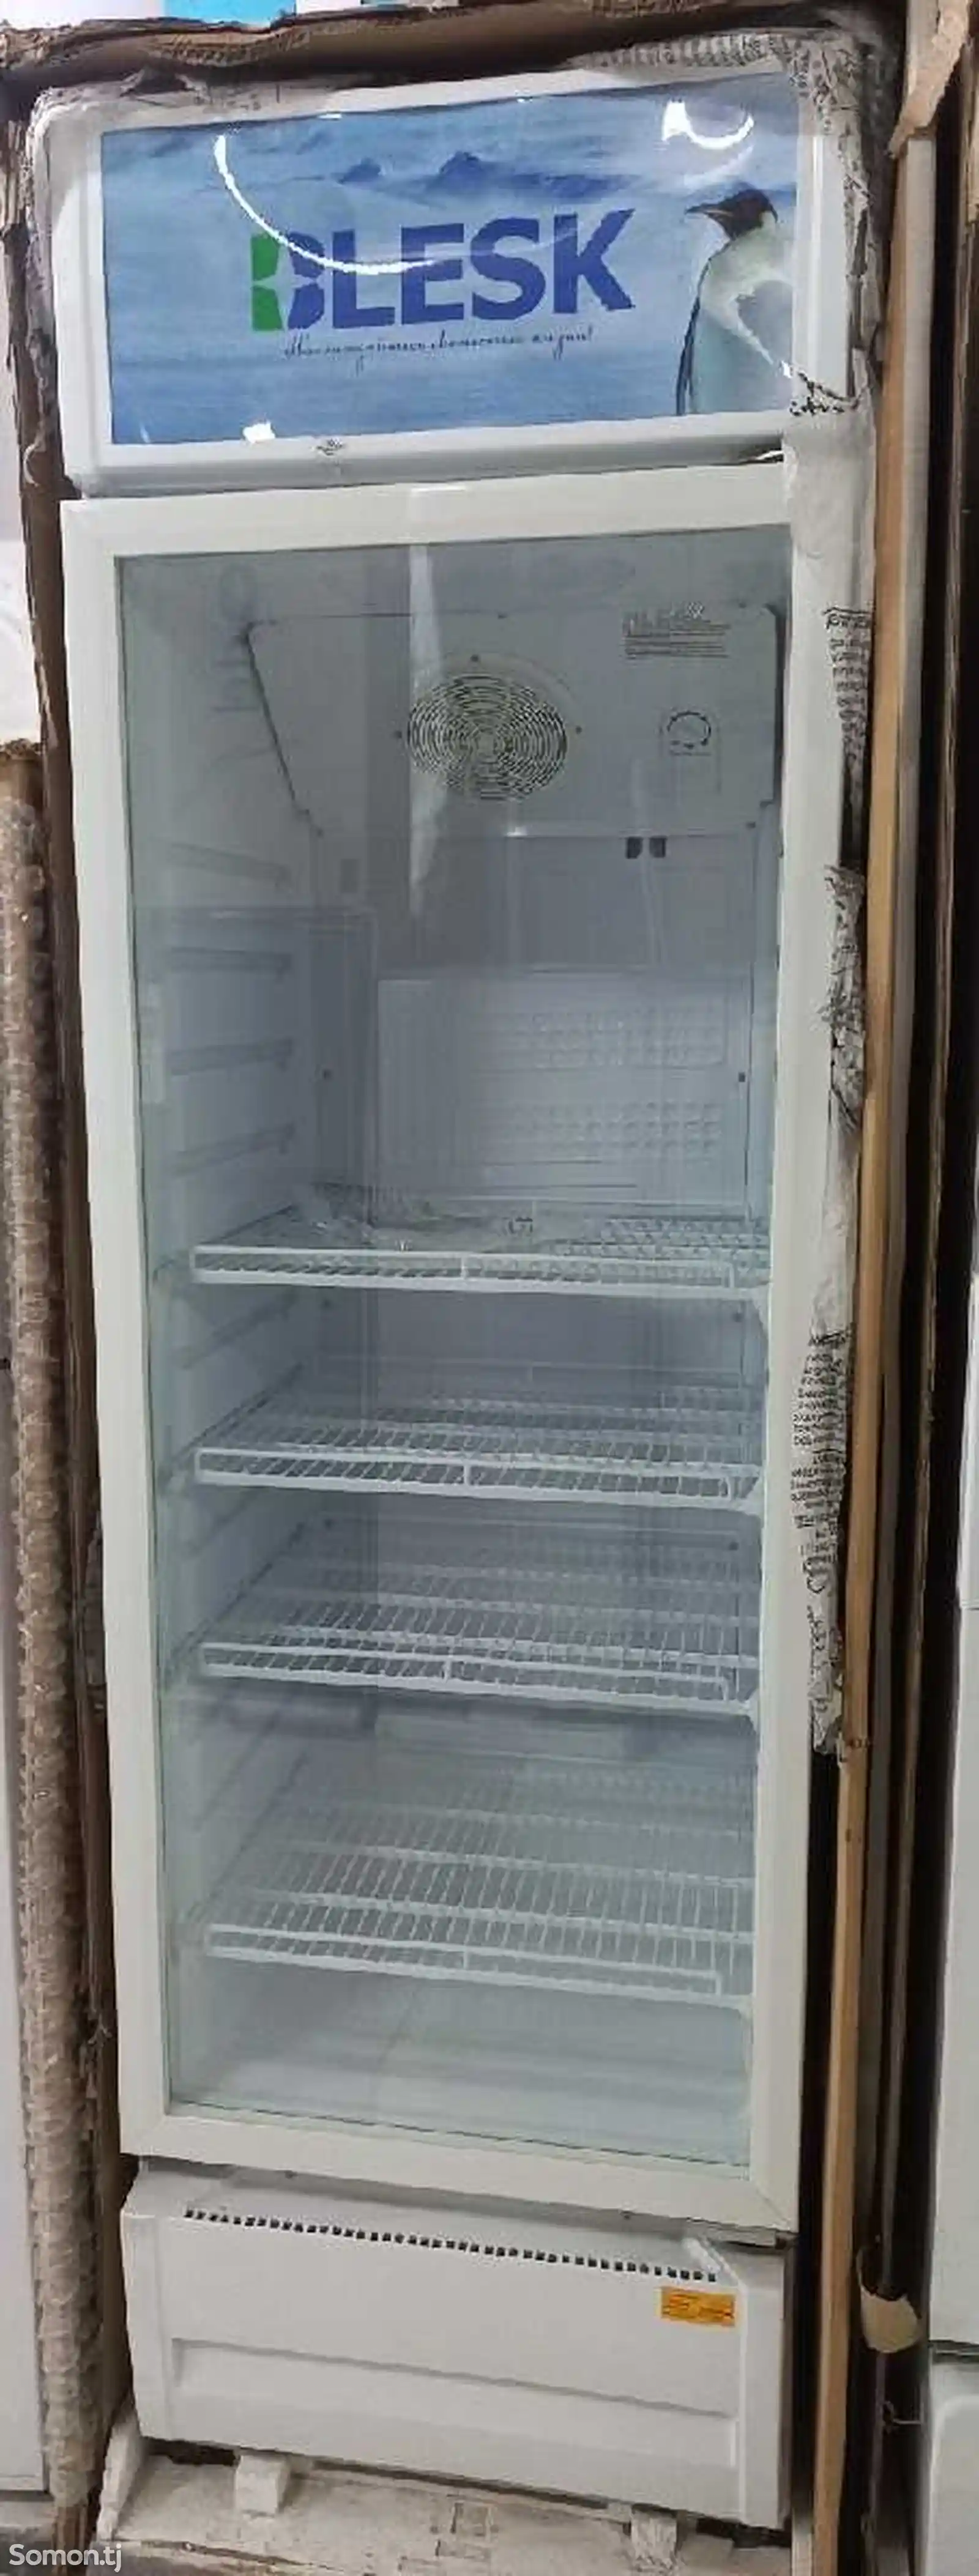 Холодильник витринный Blesk